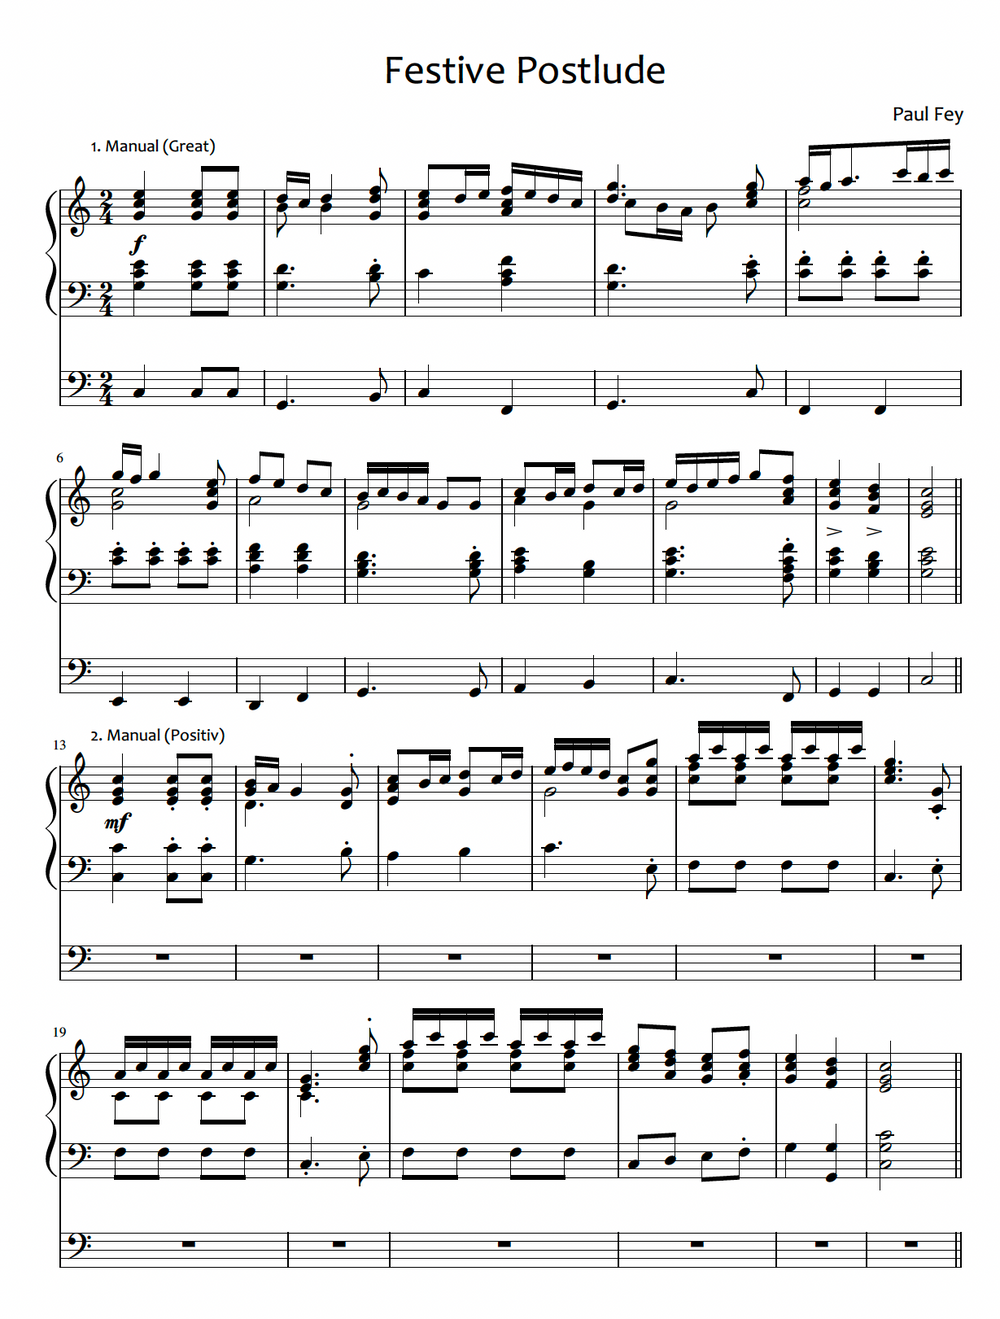 Festive Postlude in C Major (Sheet Music) - Music for Pipe Organ by Paul Fey